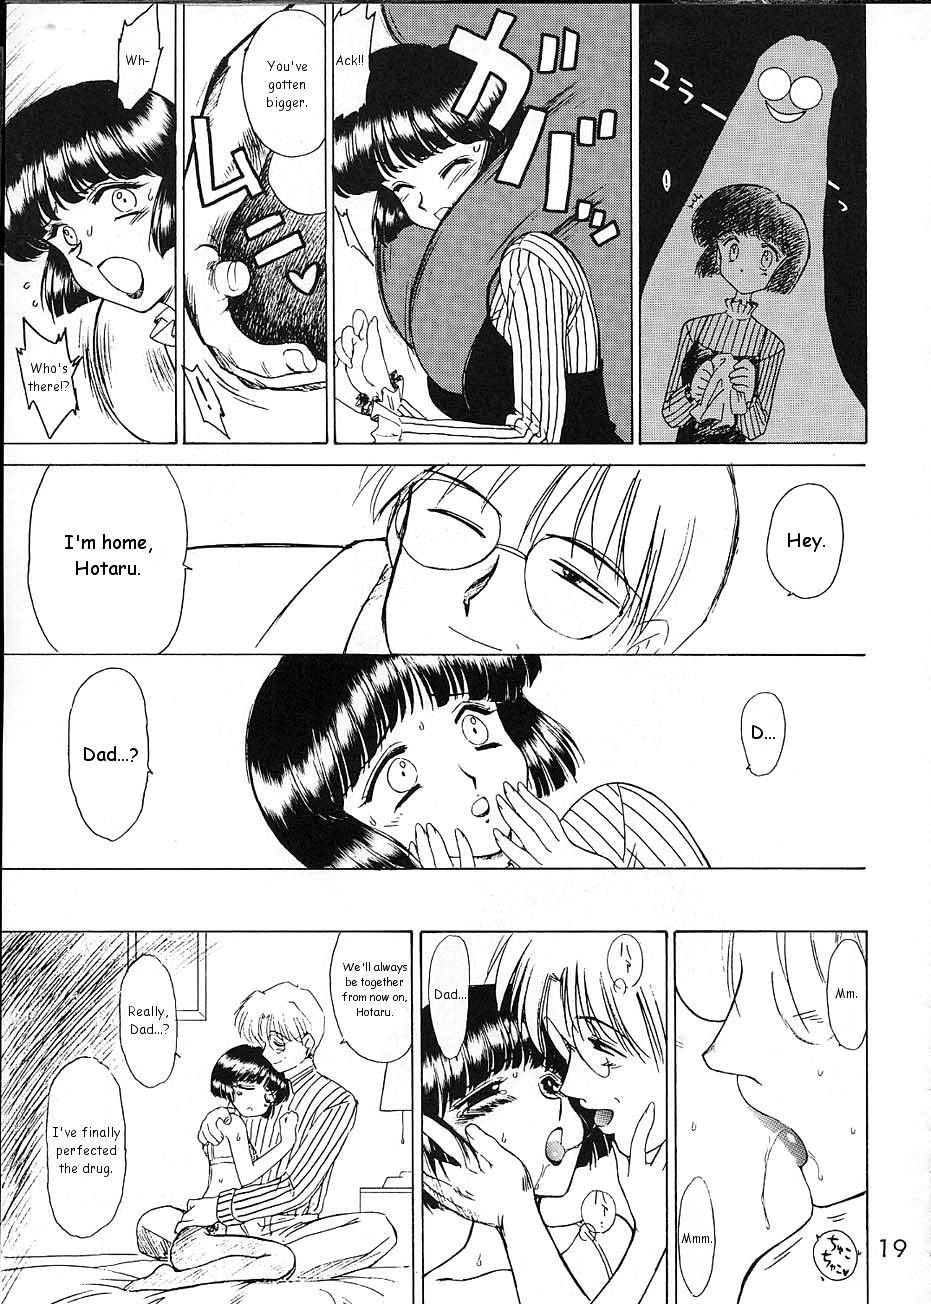 ATOM HEART FATHER sailor moon 17 hentai manga